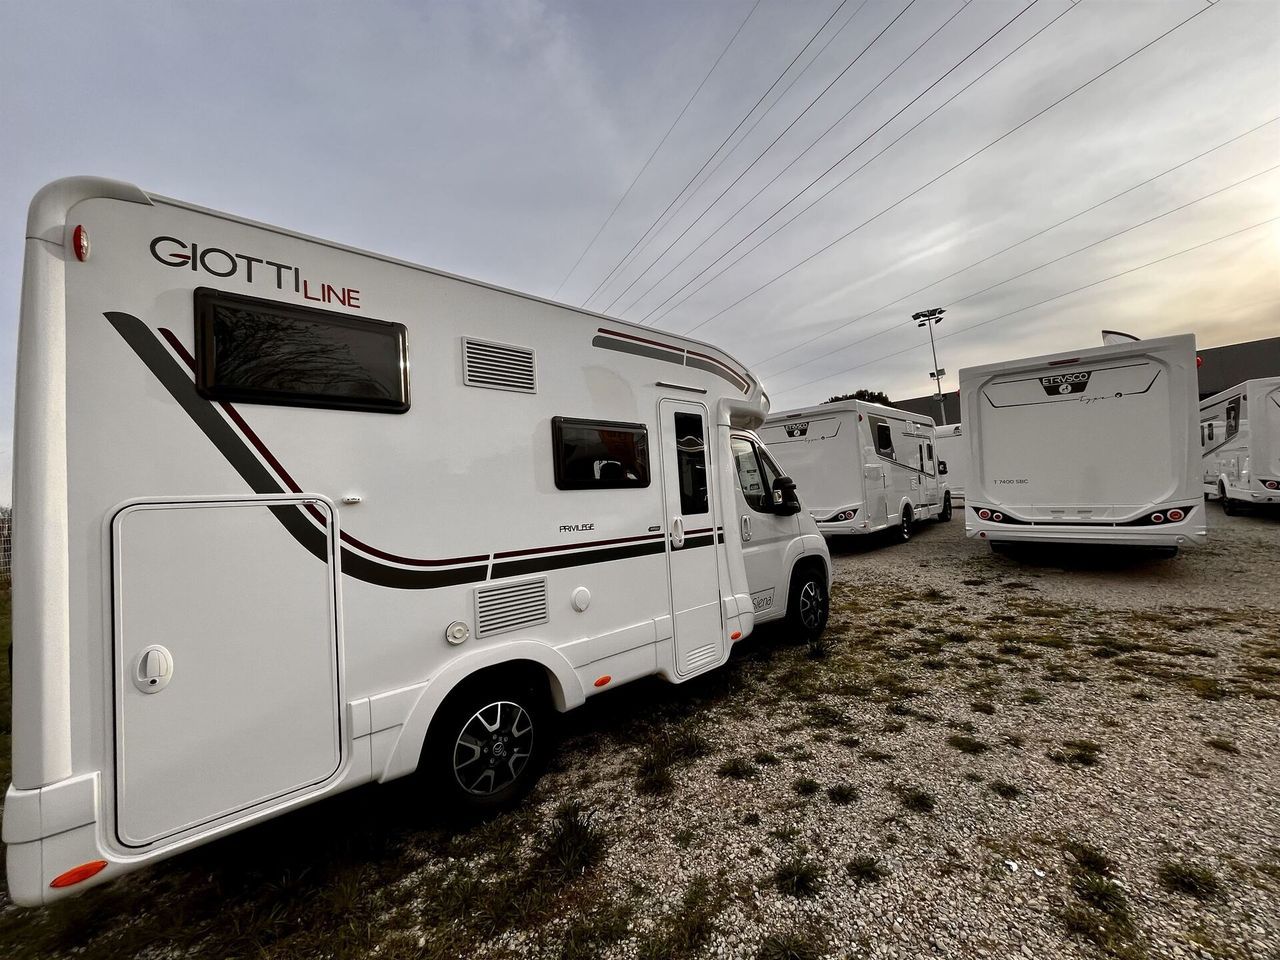 Camping-car - Giottiline - SIENA 322 - 2022